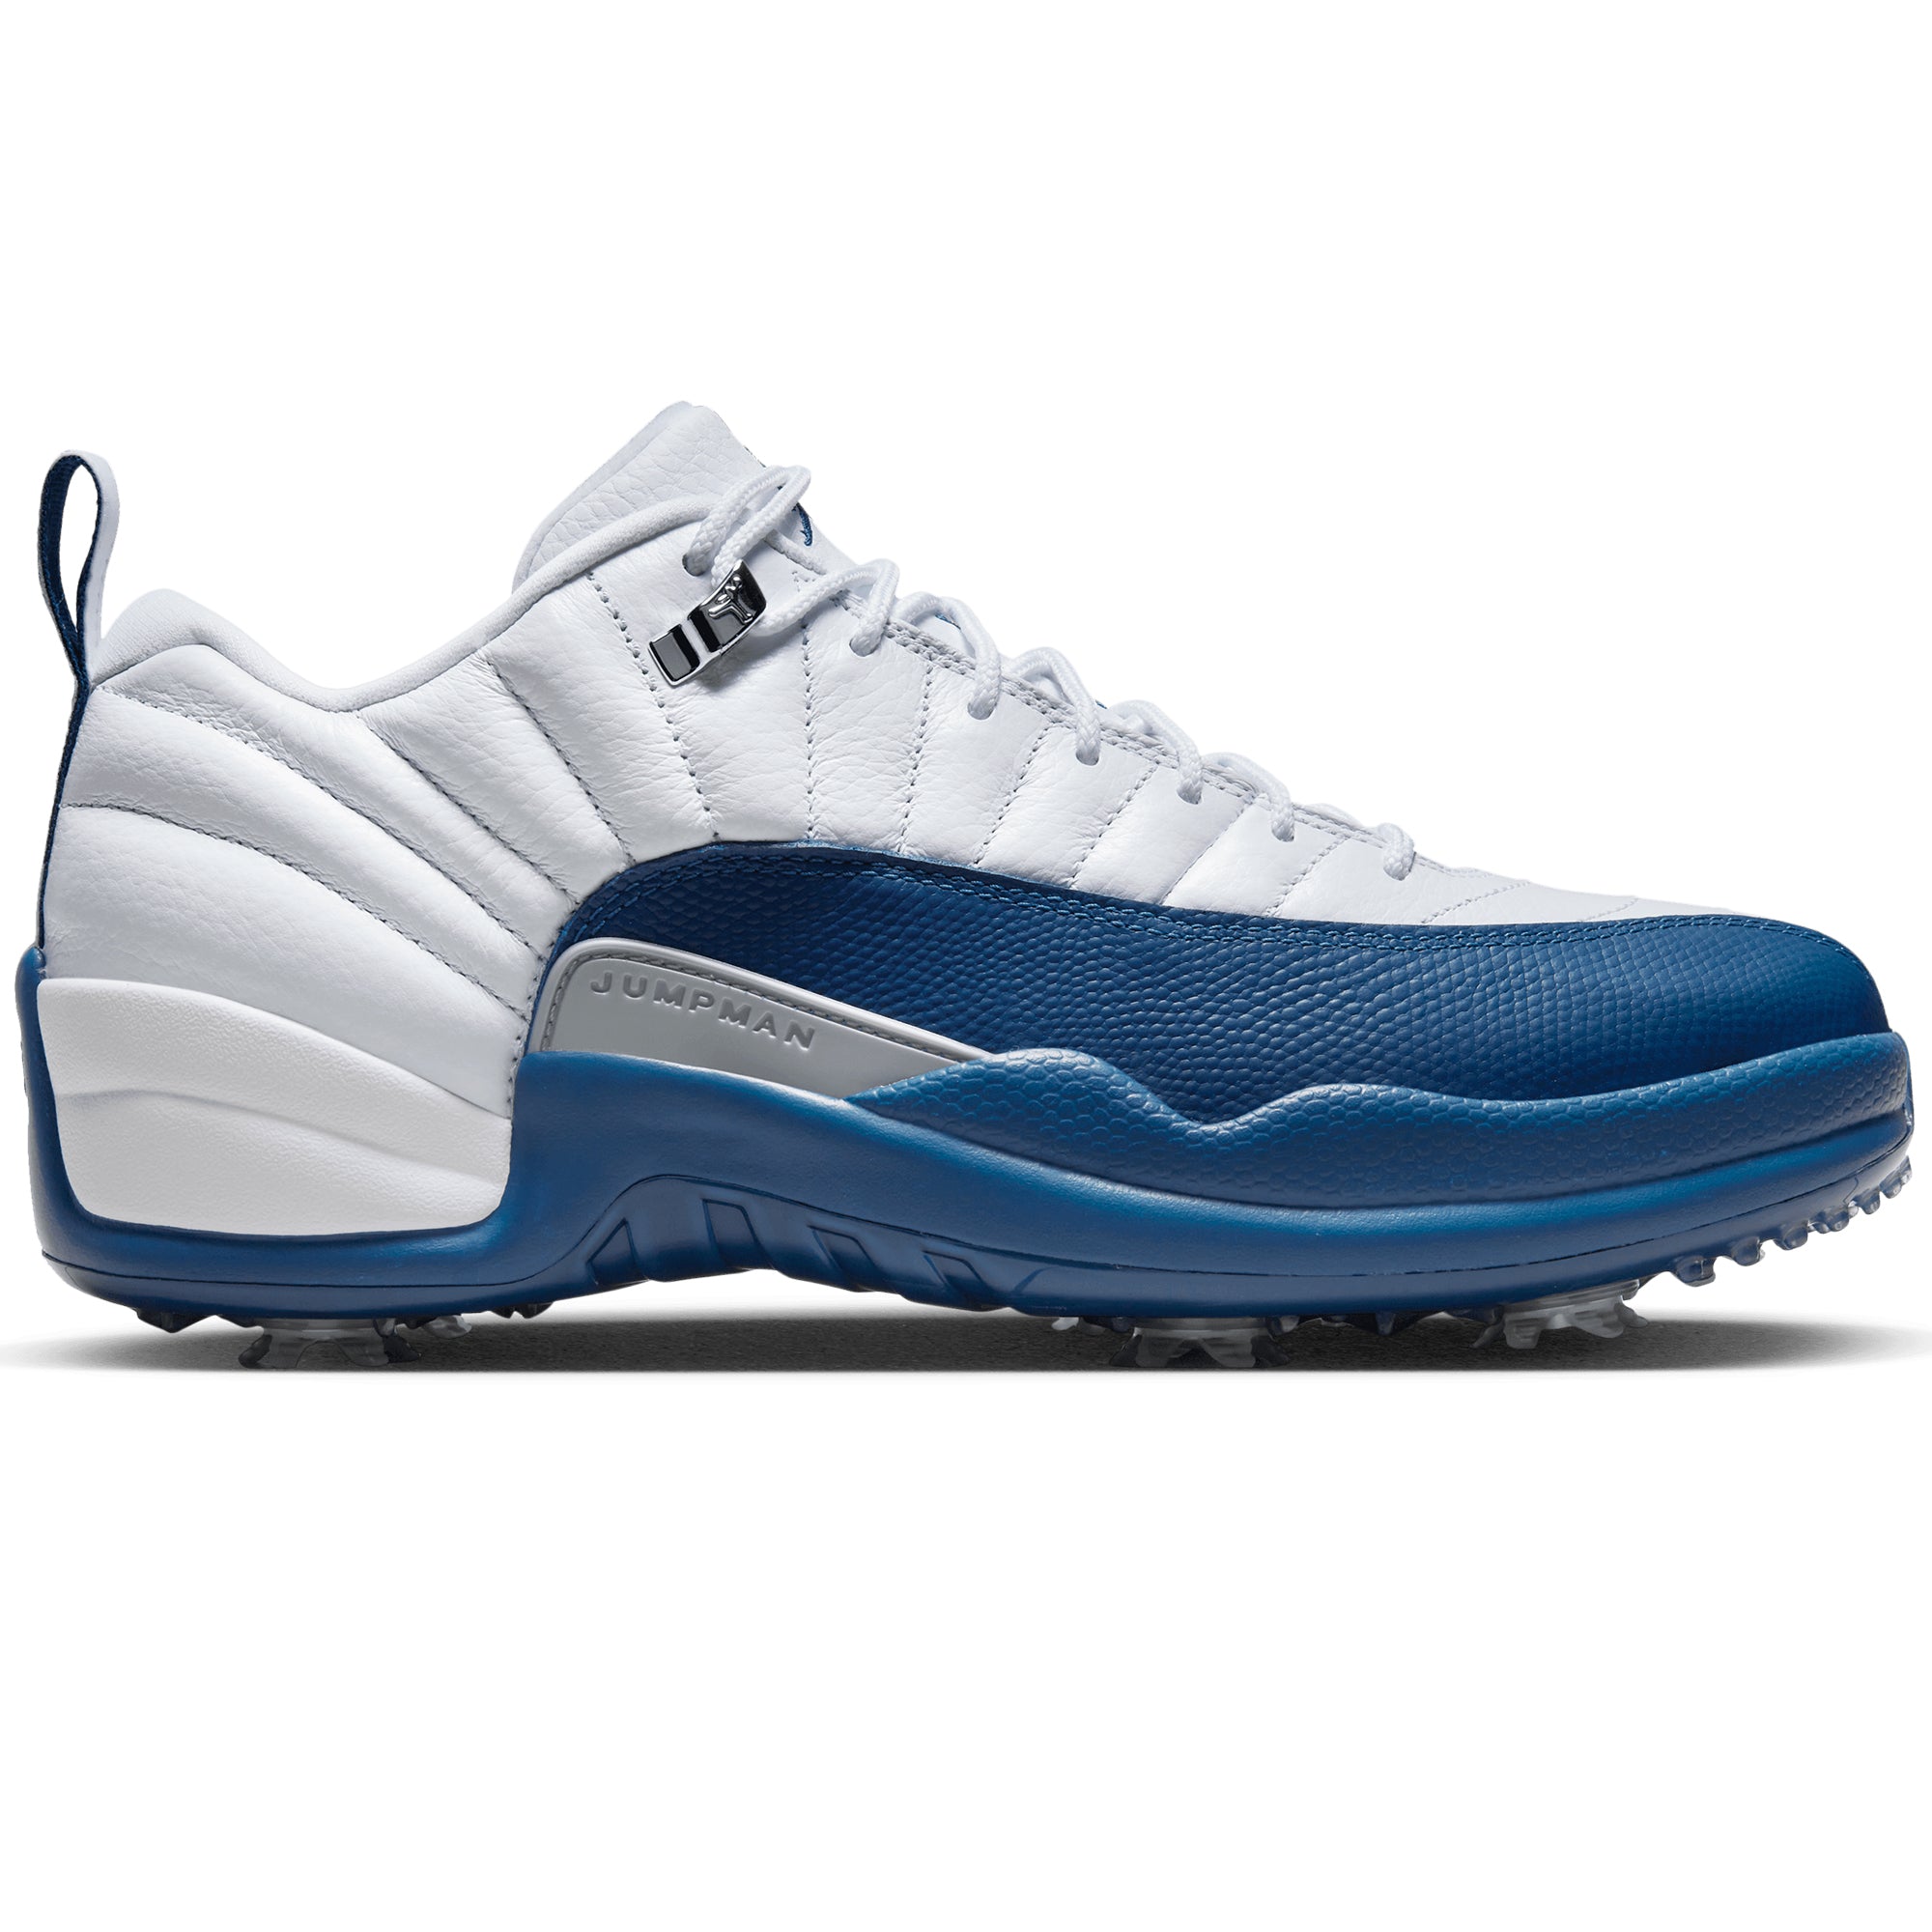 nike-air-jordan-12-low-golf-shoes-dh4120-white-metallic-silver-french-blue-101